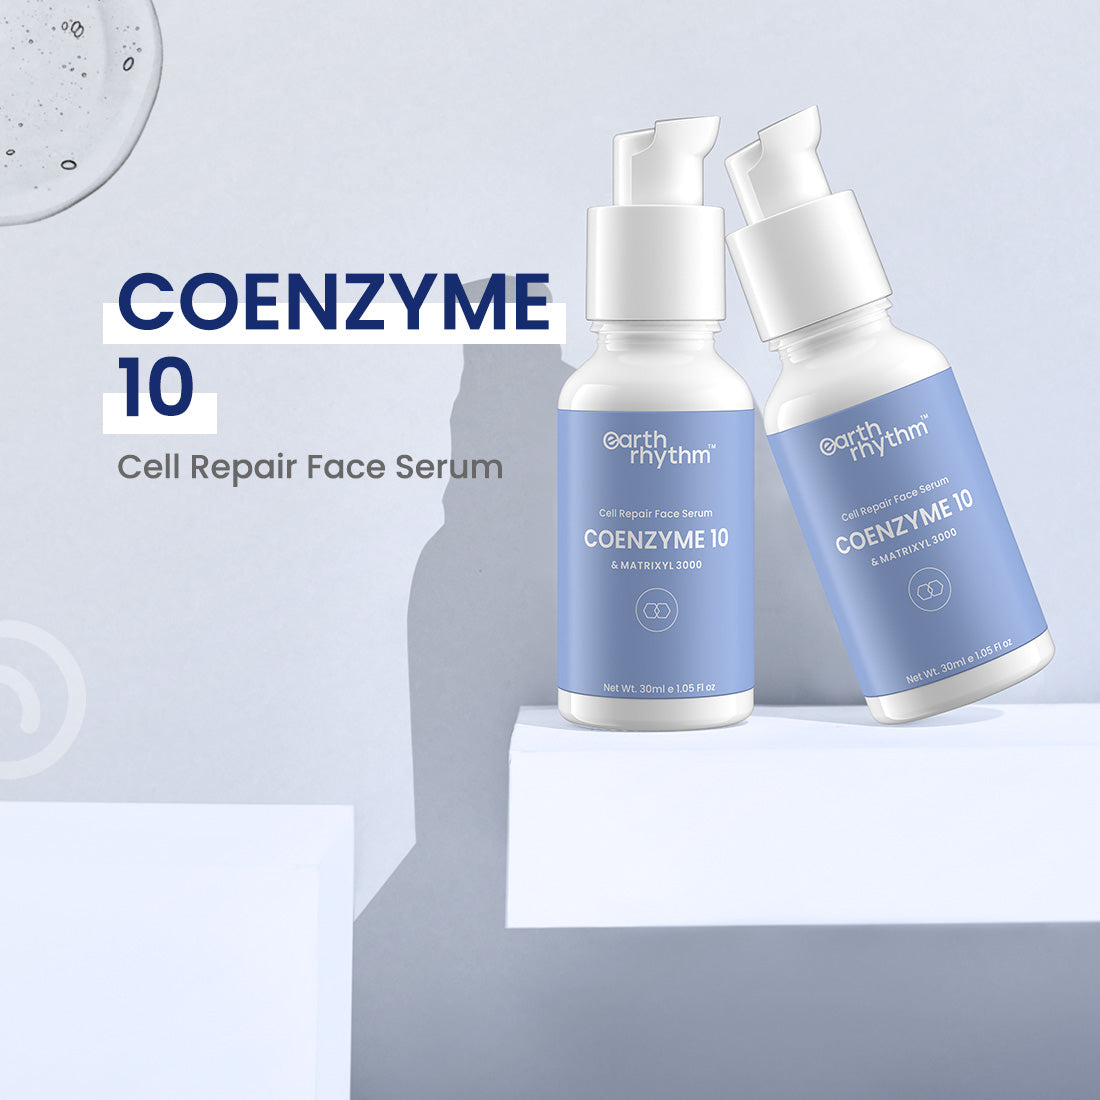 Coenzyme 10 - Cell Repair Serum